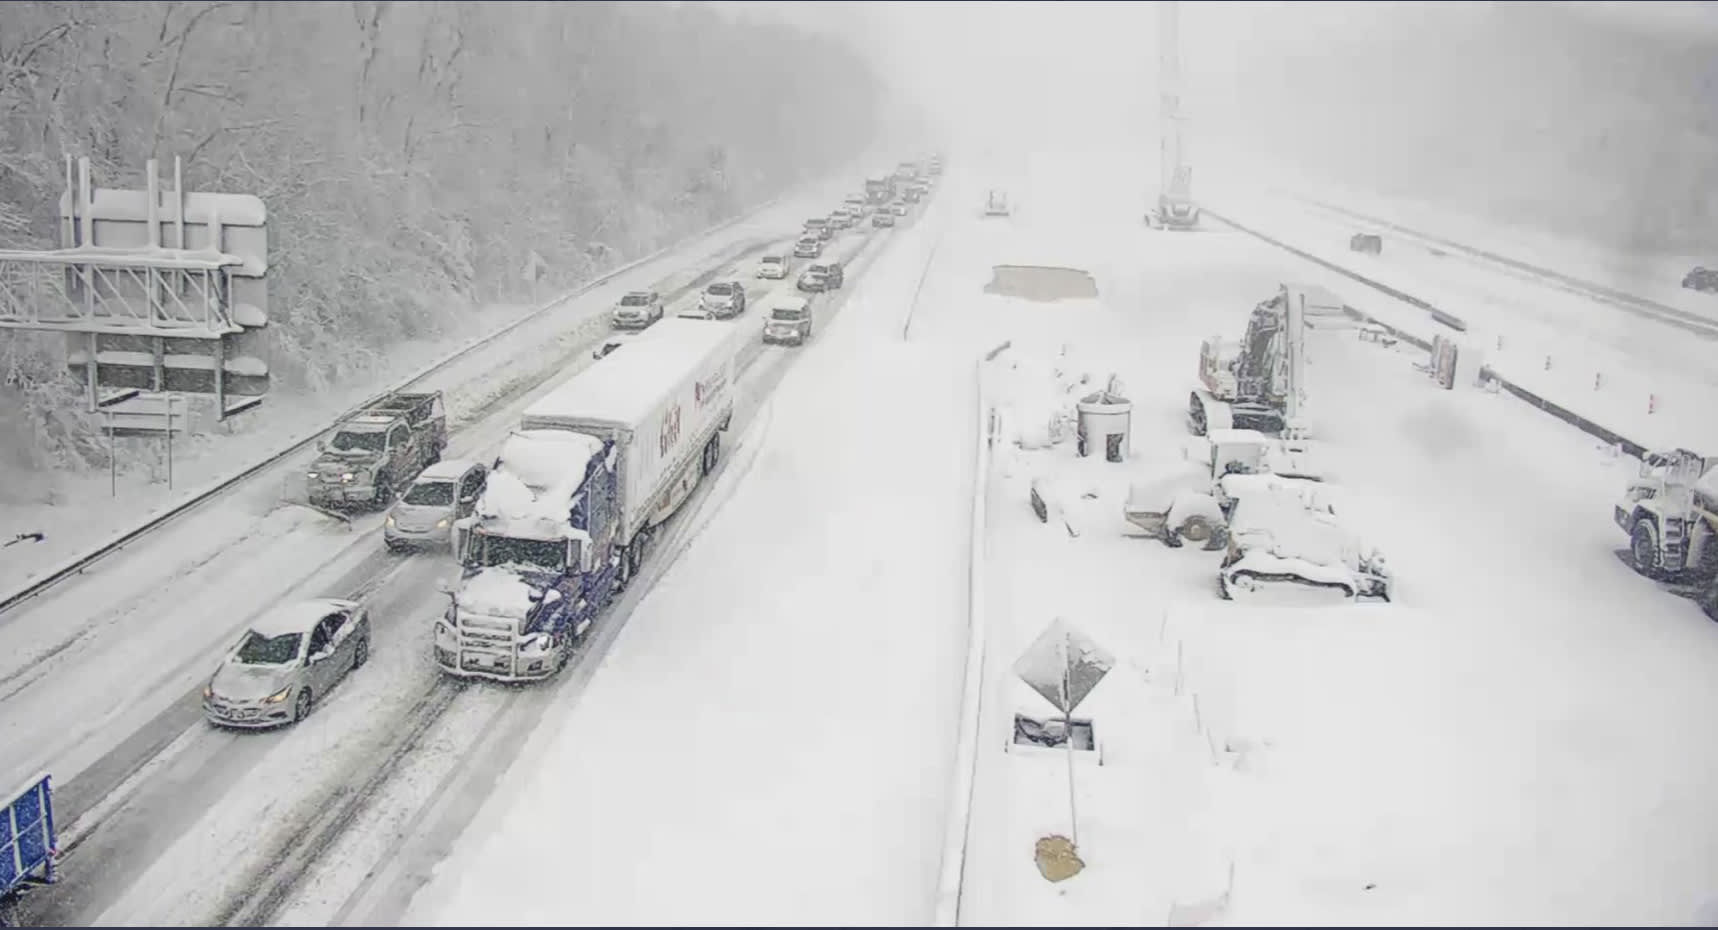 Sen. Tim Kaine among hundreds trapped in Virginia snowstorm traffic jam